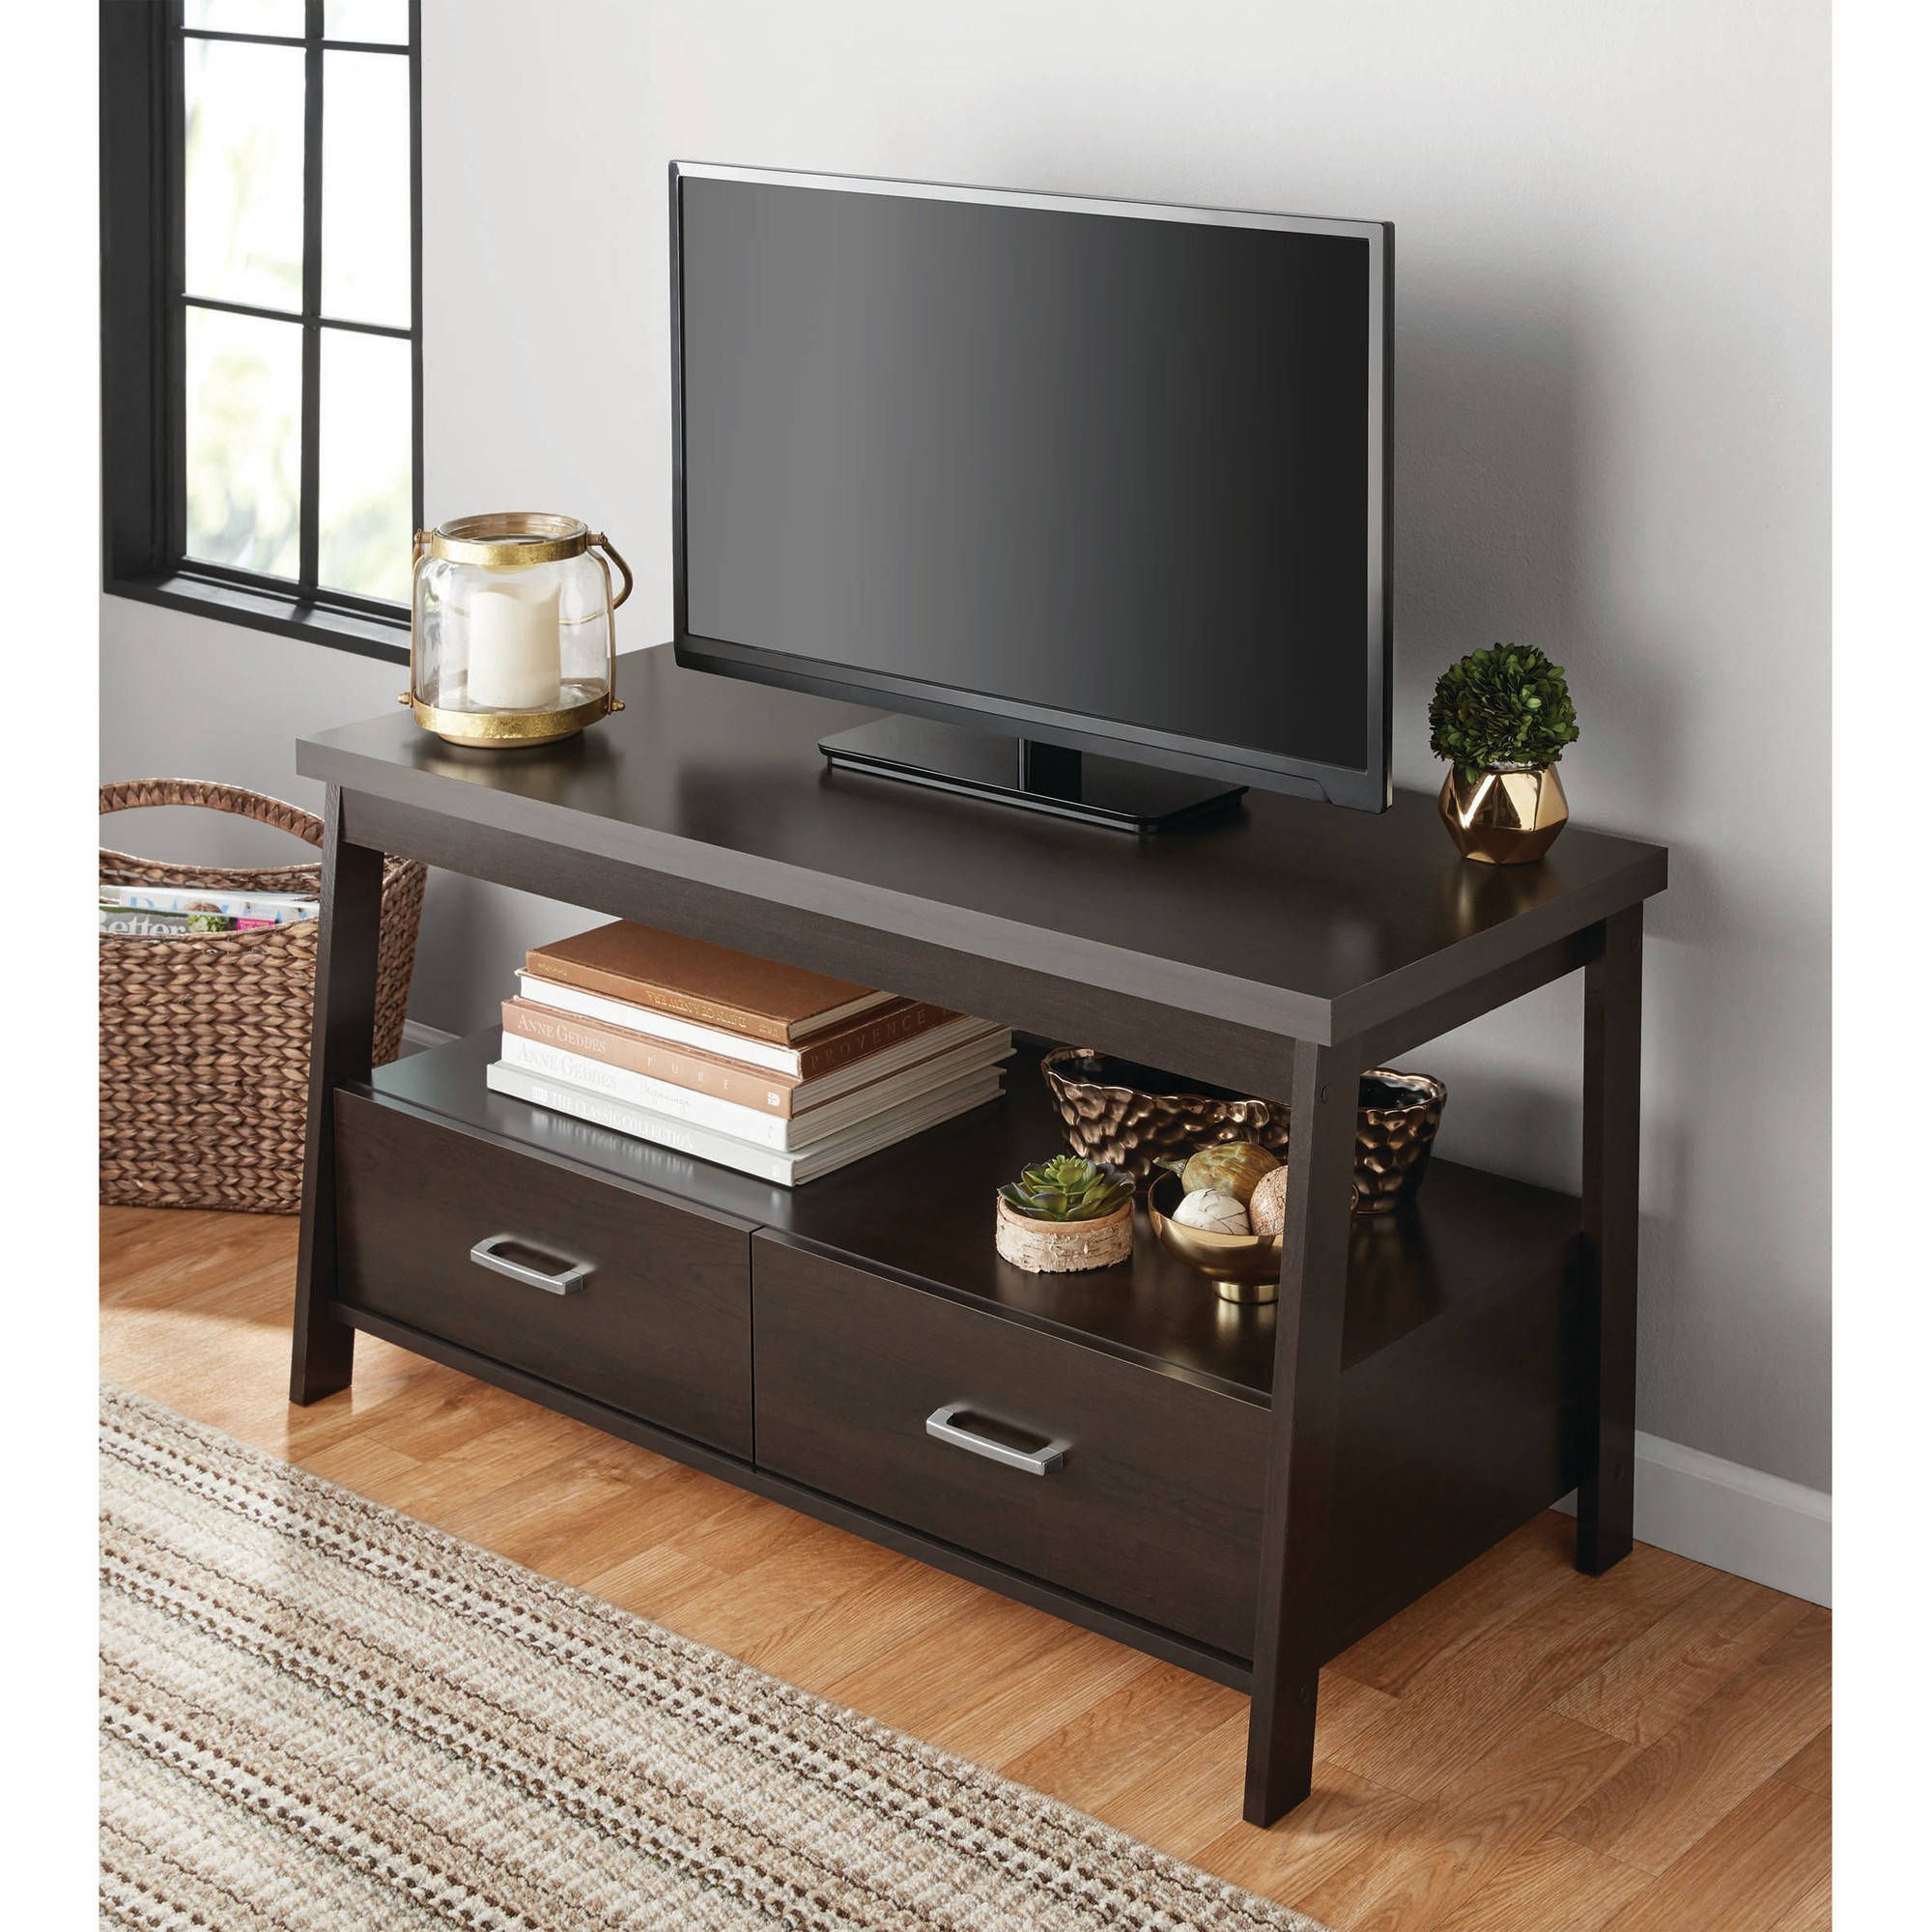 Mainstays Logan Tv Stand For Tvs Up To 47", Espresso Regarding Alden Design Wooden Tv Stands With Storage Cabinet Espresso (View 3 of 15)